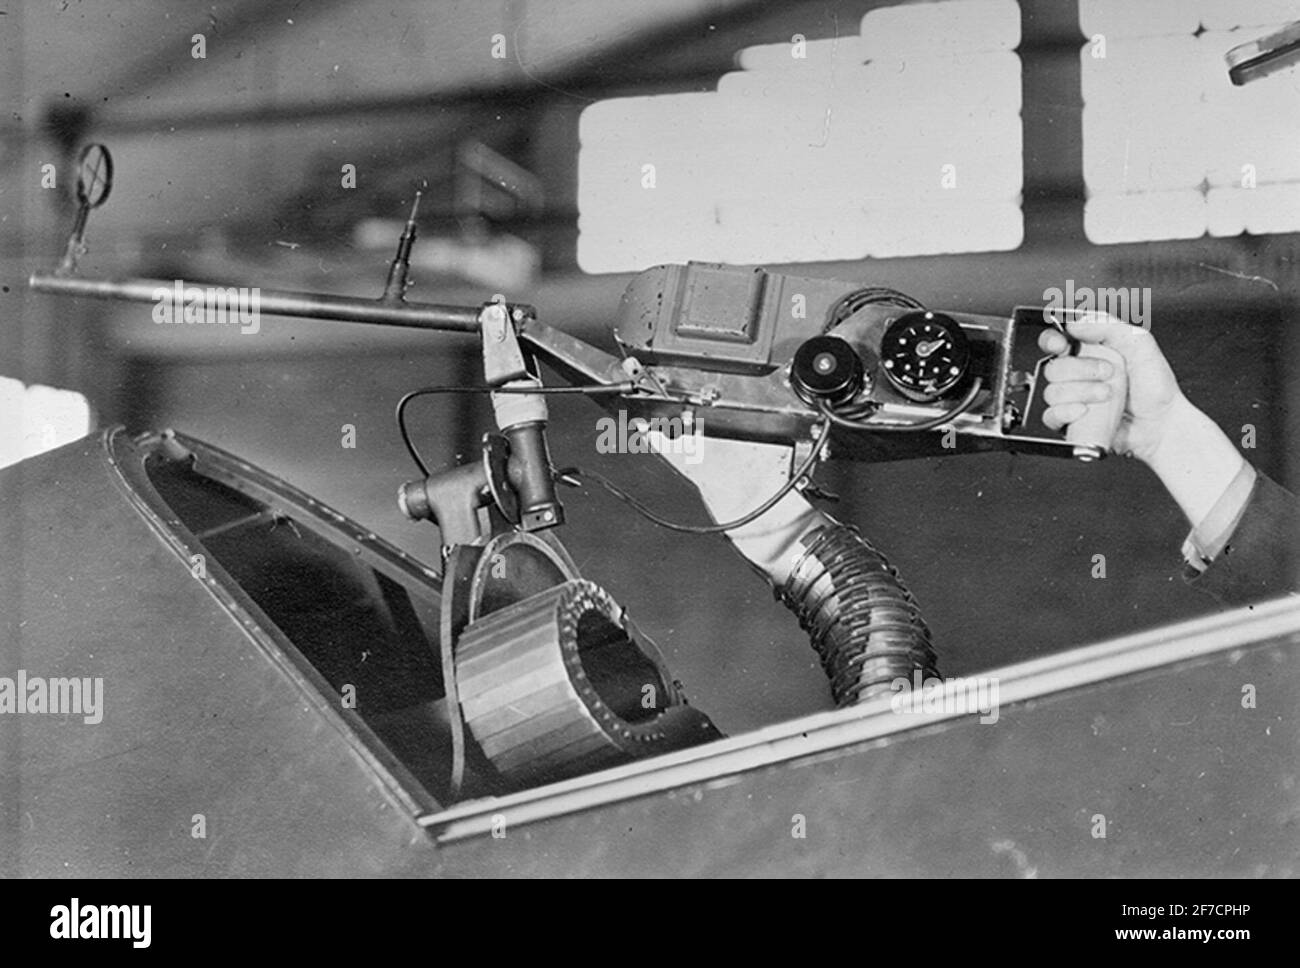 Bulleted Camera KK3, Attrum Mounted in Airplane S 17 Bulp Camera KK3, Atrum Mounted in Airplane S 17 Stock Photo